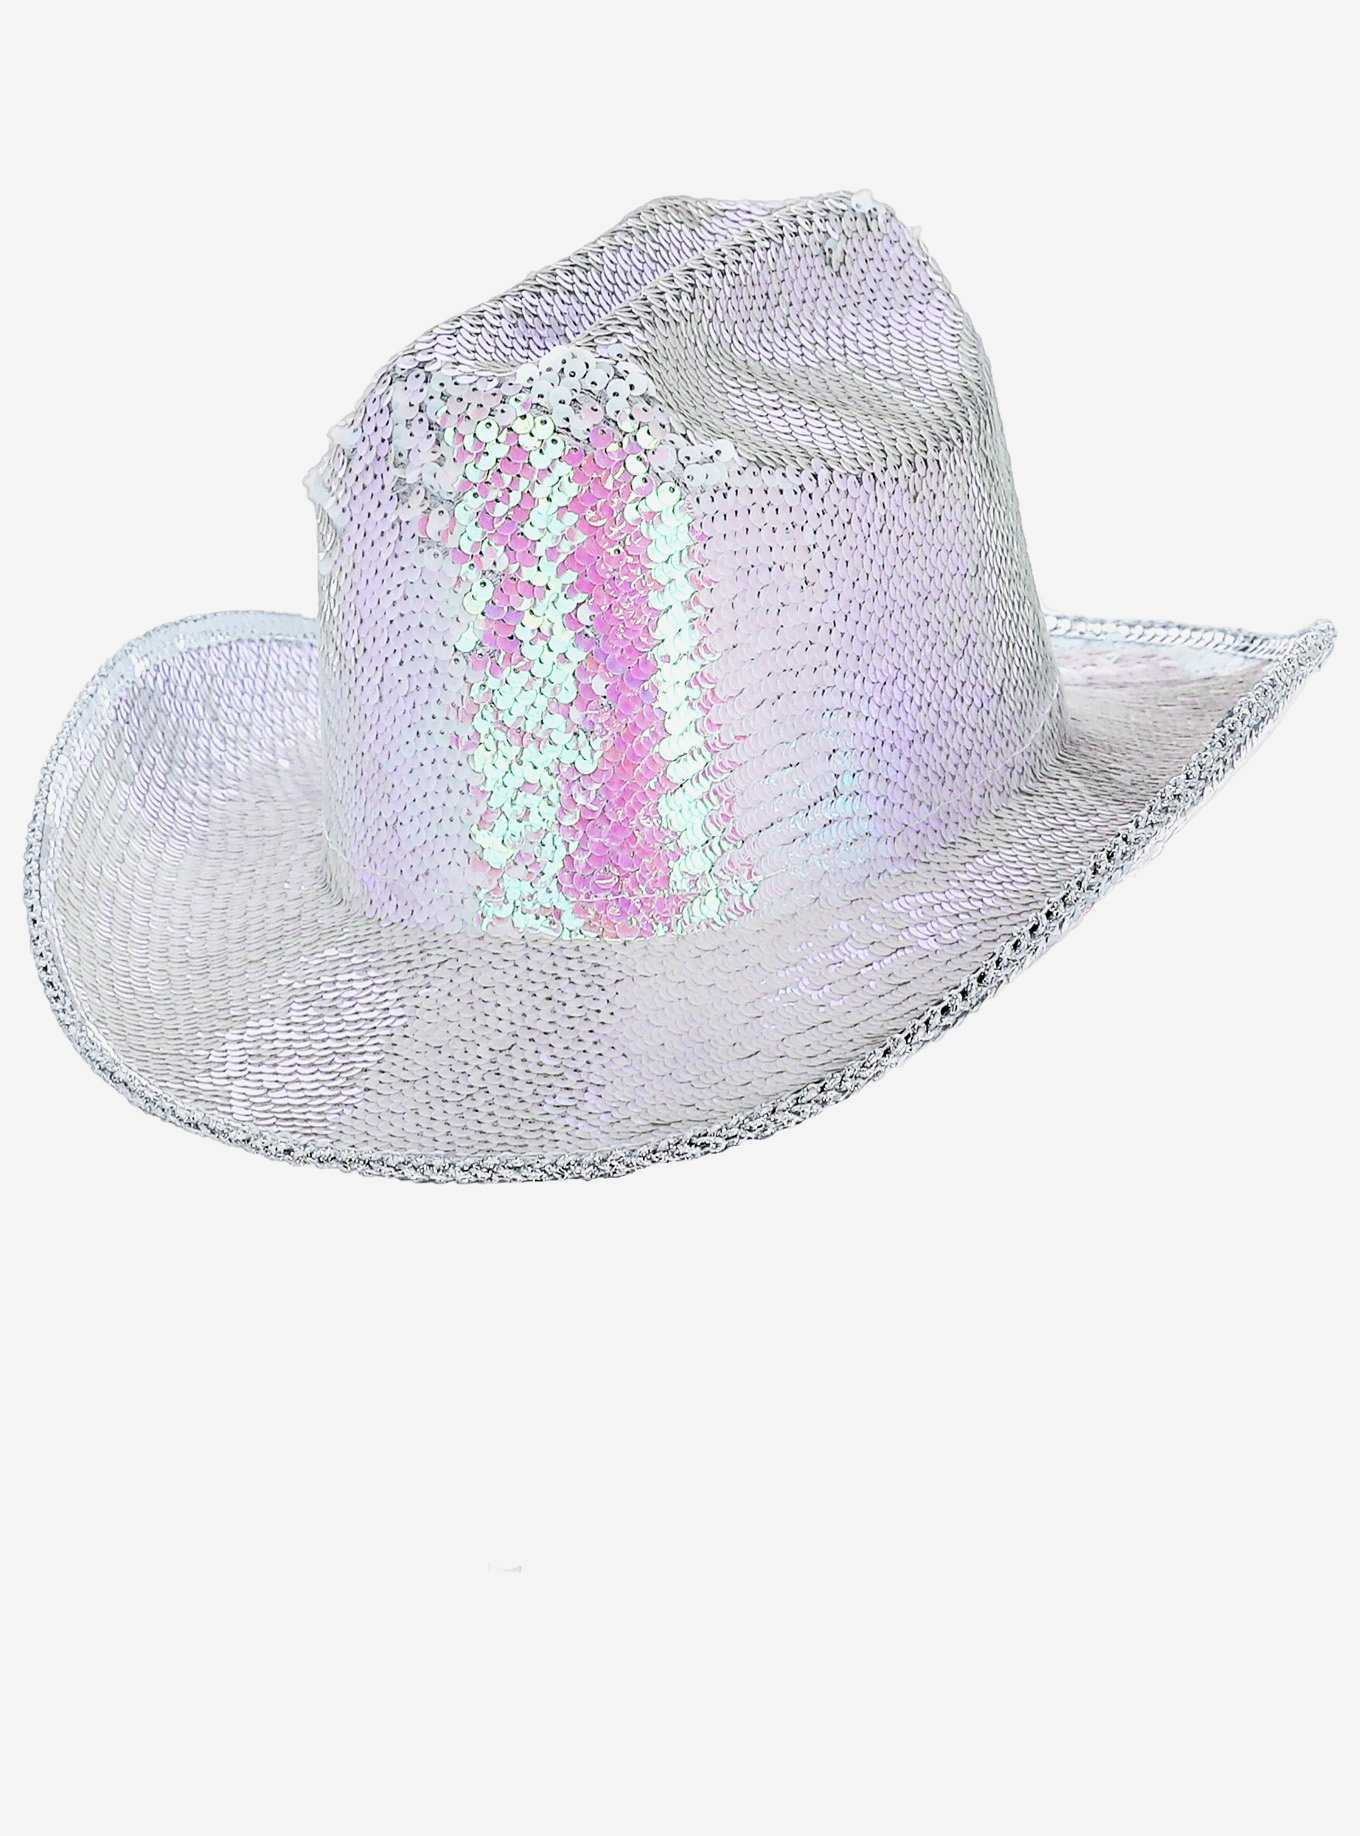 Deluxe Sequin Cowboy Hat Iridescent White, , hi-res